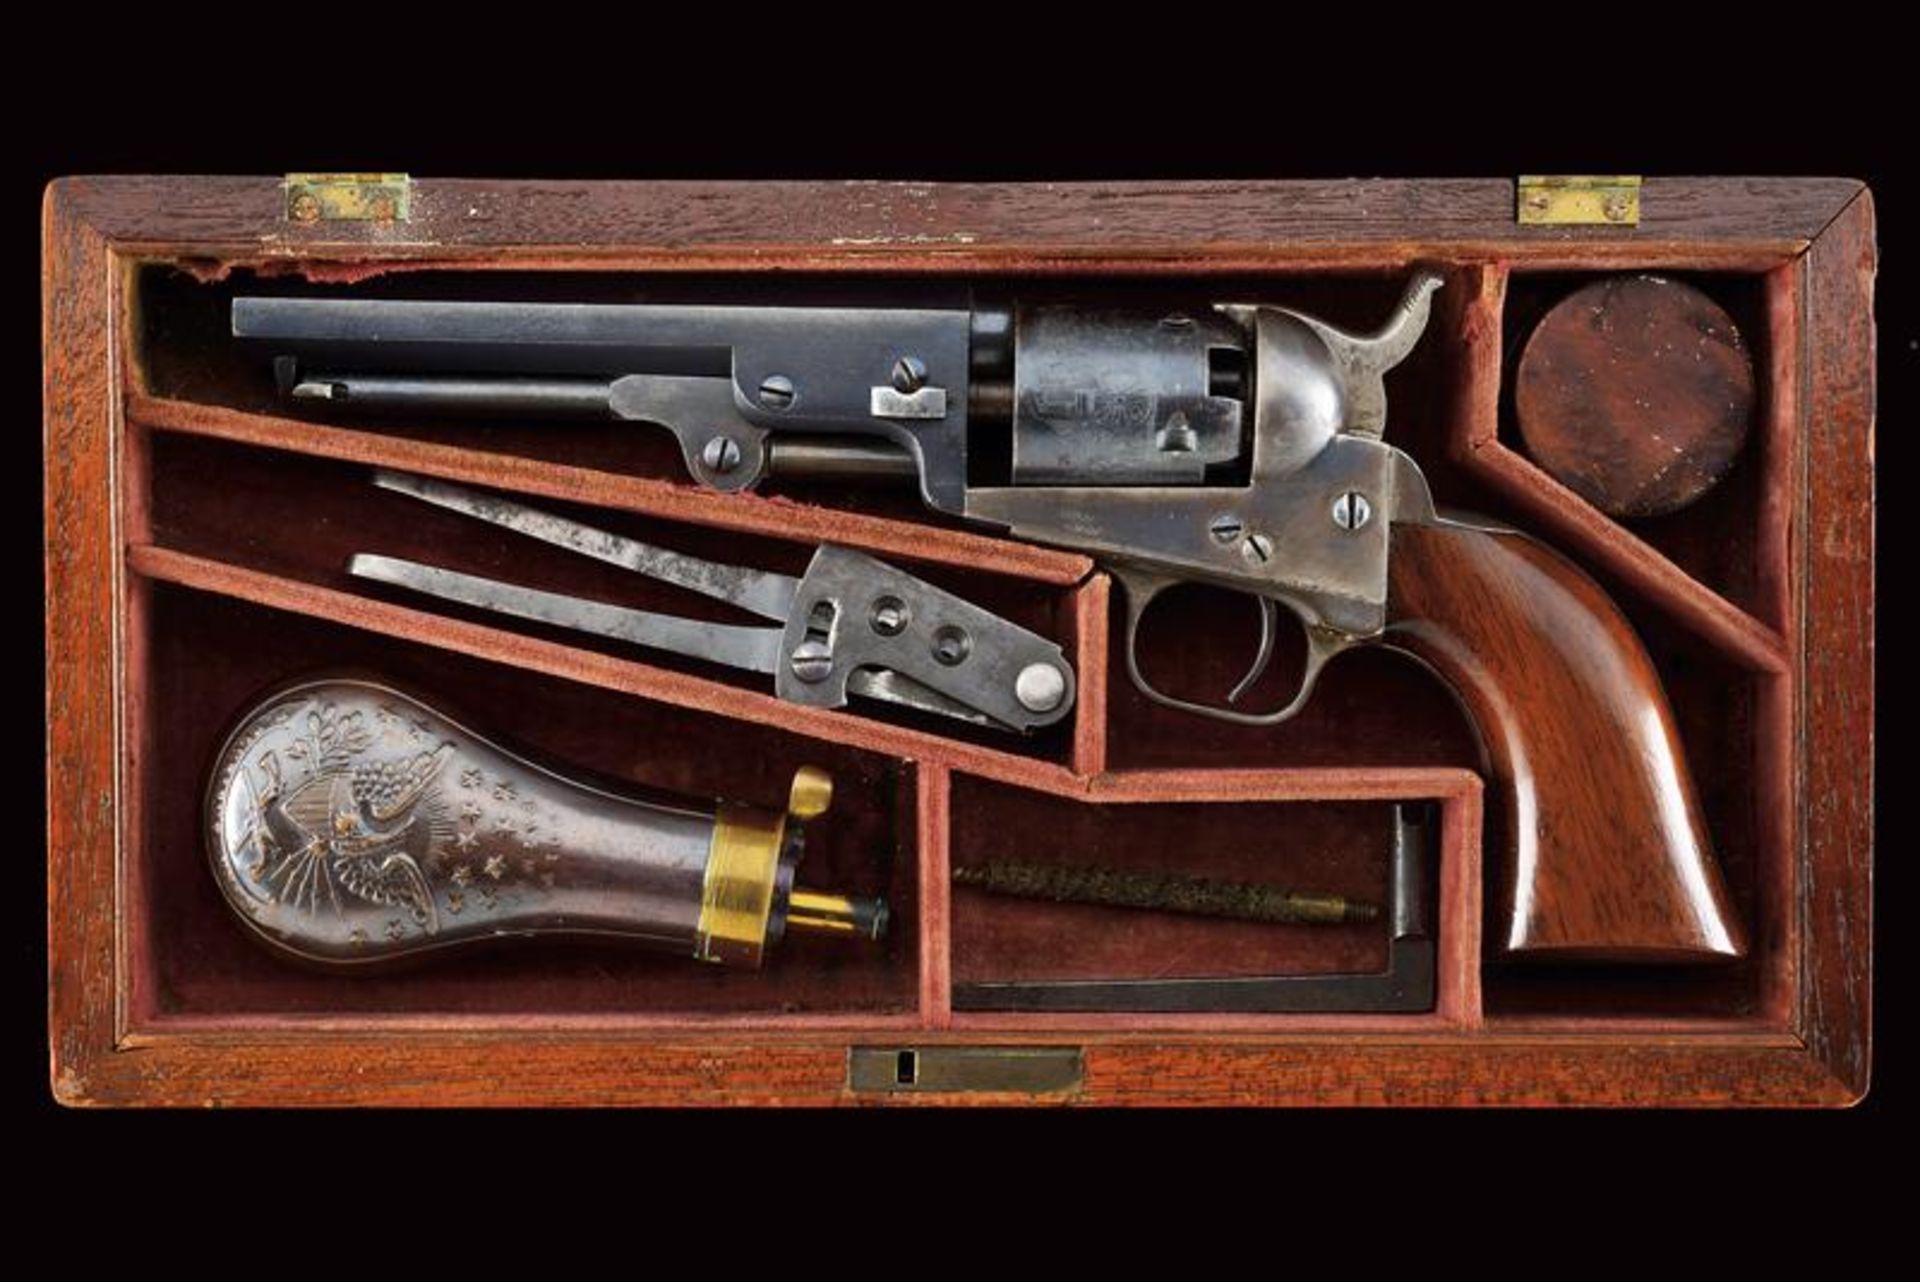 A Colt Model 1849 Pcoket Revolver with case